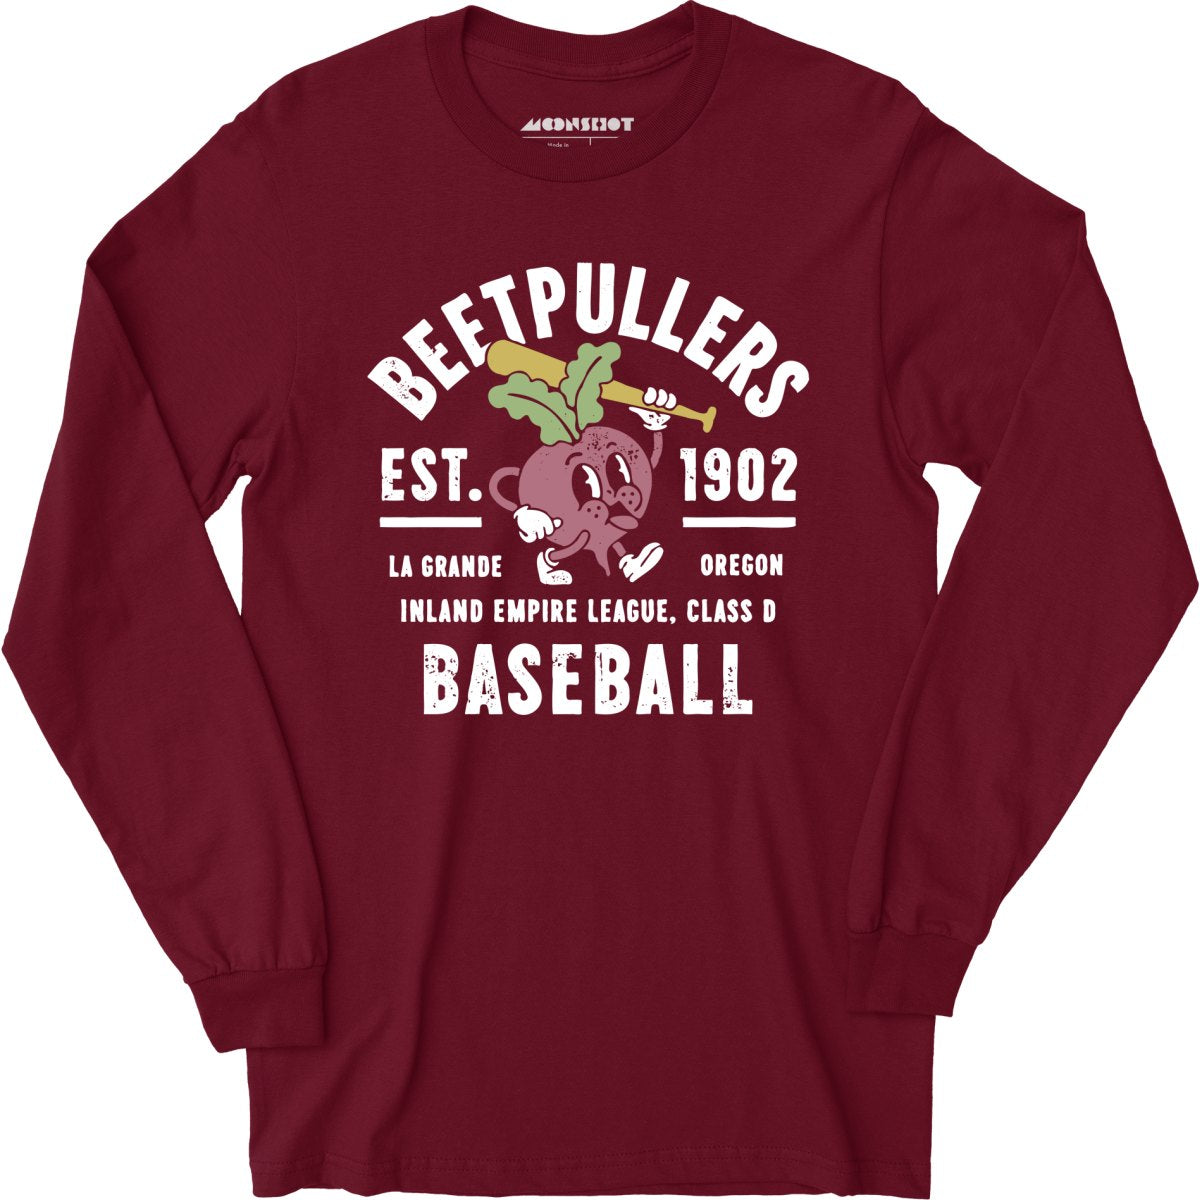 La Grande Beetpullers - Oregon - Vintage Defunct Baseball Teams - Long Sleeve T-Shirt